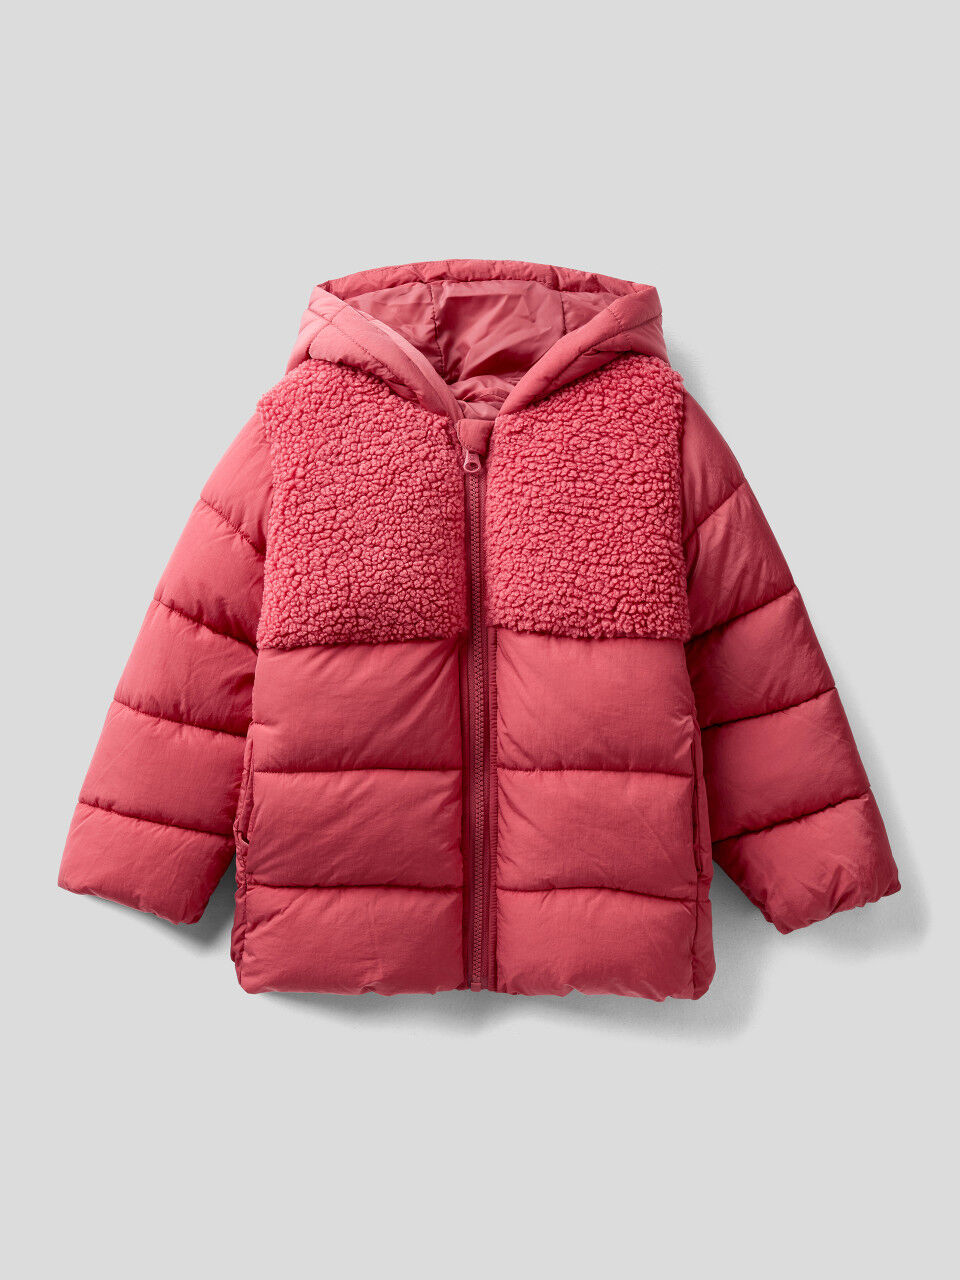 KIDS FASHION Jackets Print Benetton jacket discount 72% Gray 8Y 